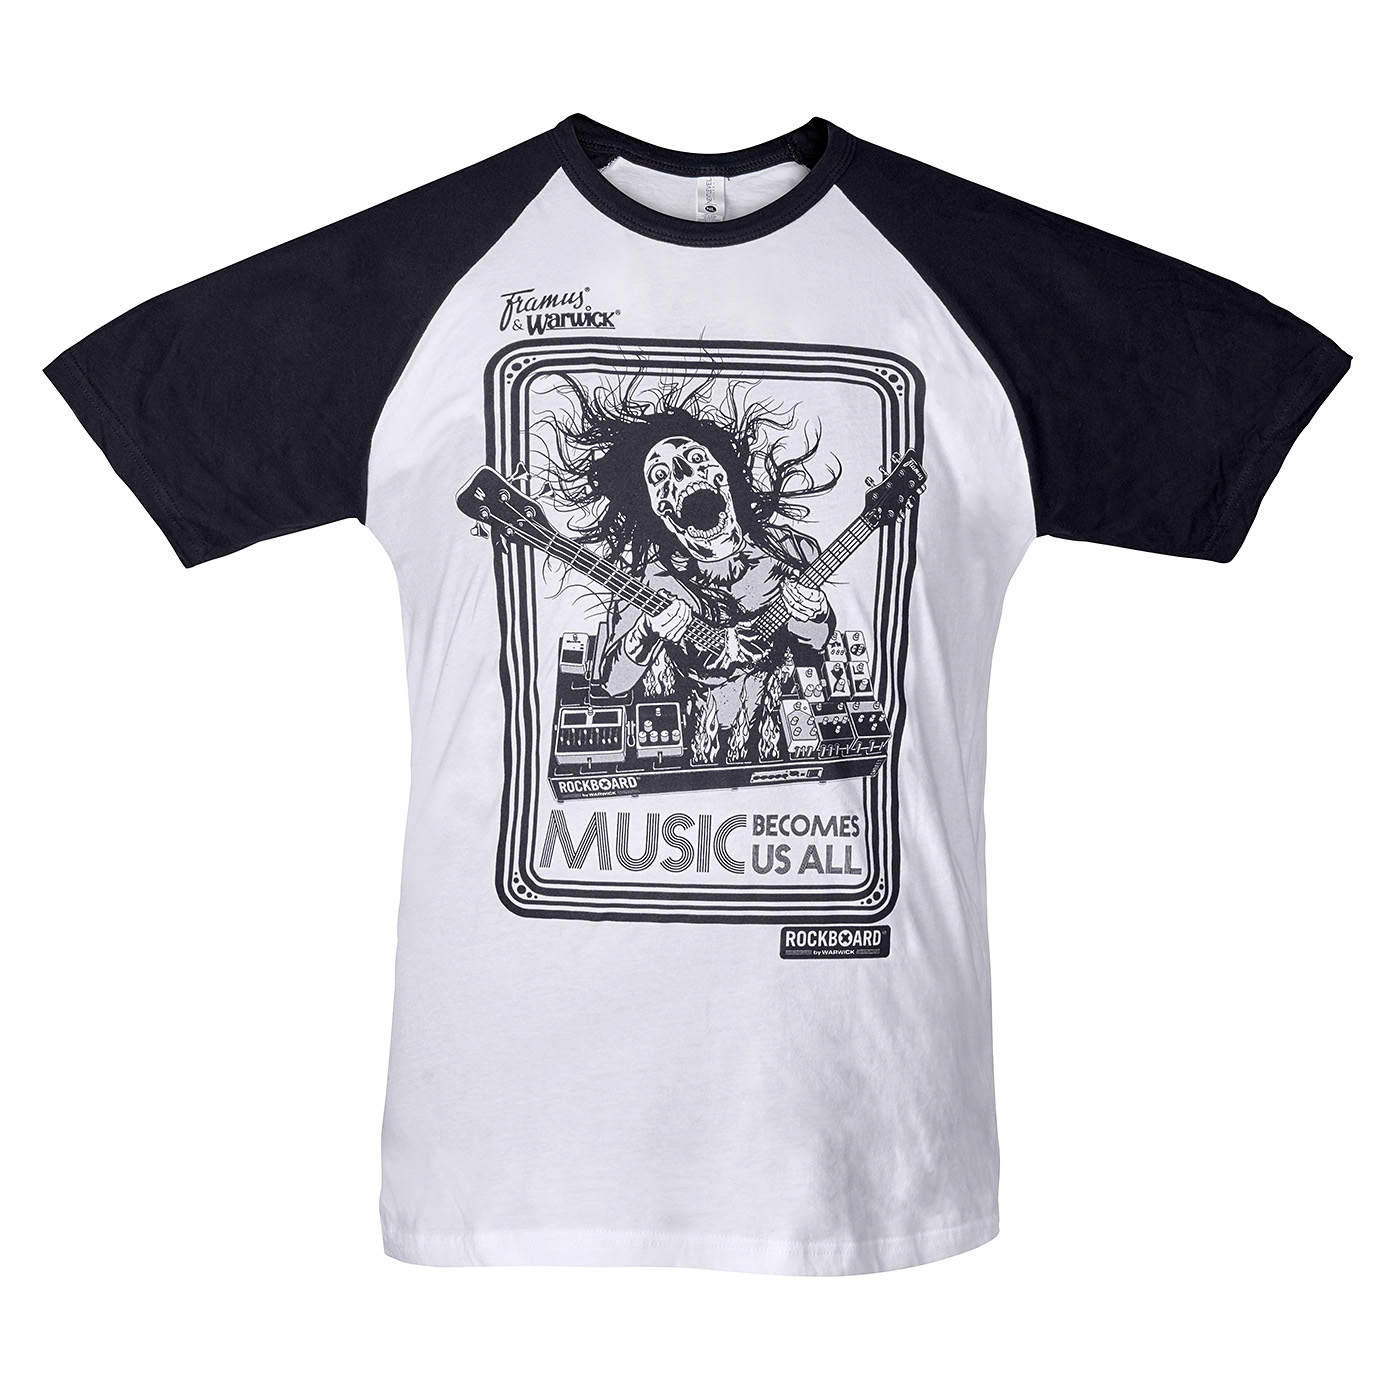 RockBoard Promo - Screamer Baseball T-Shirt White/Black - Size S